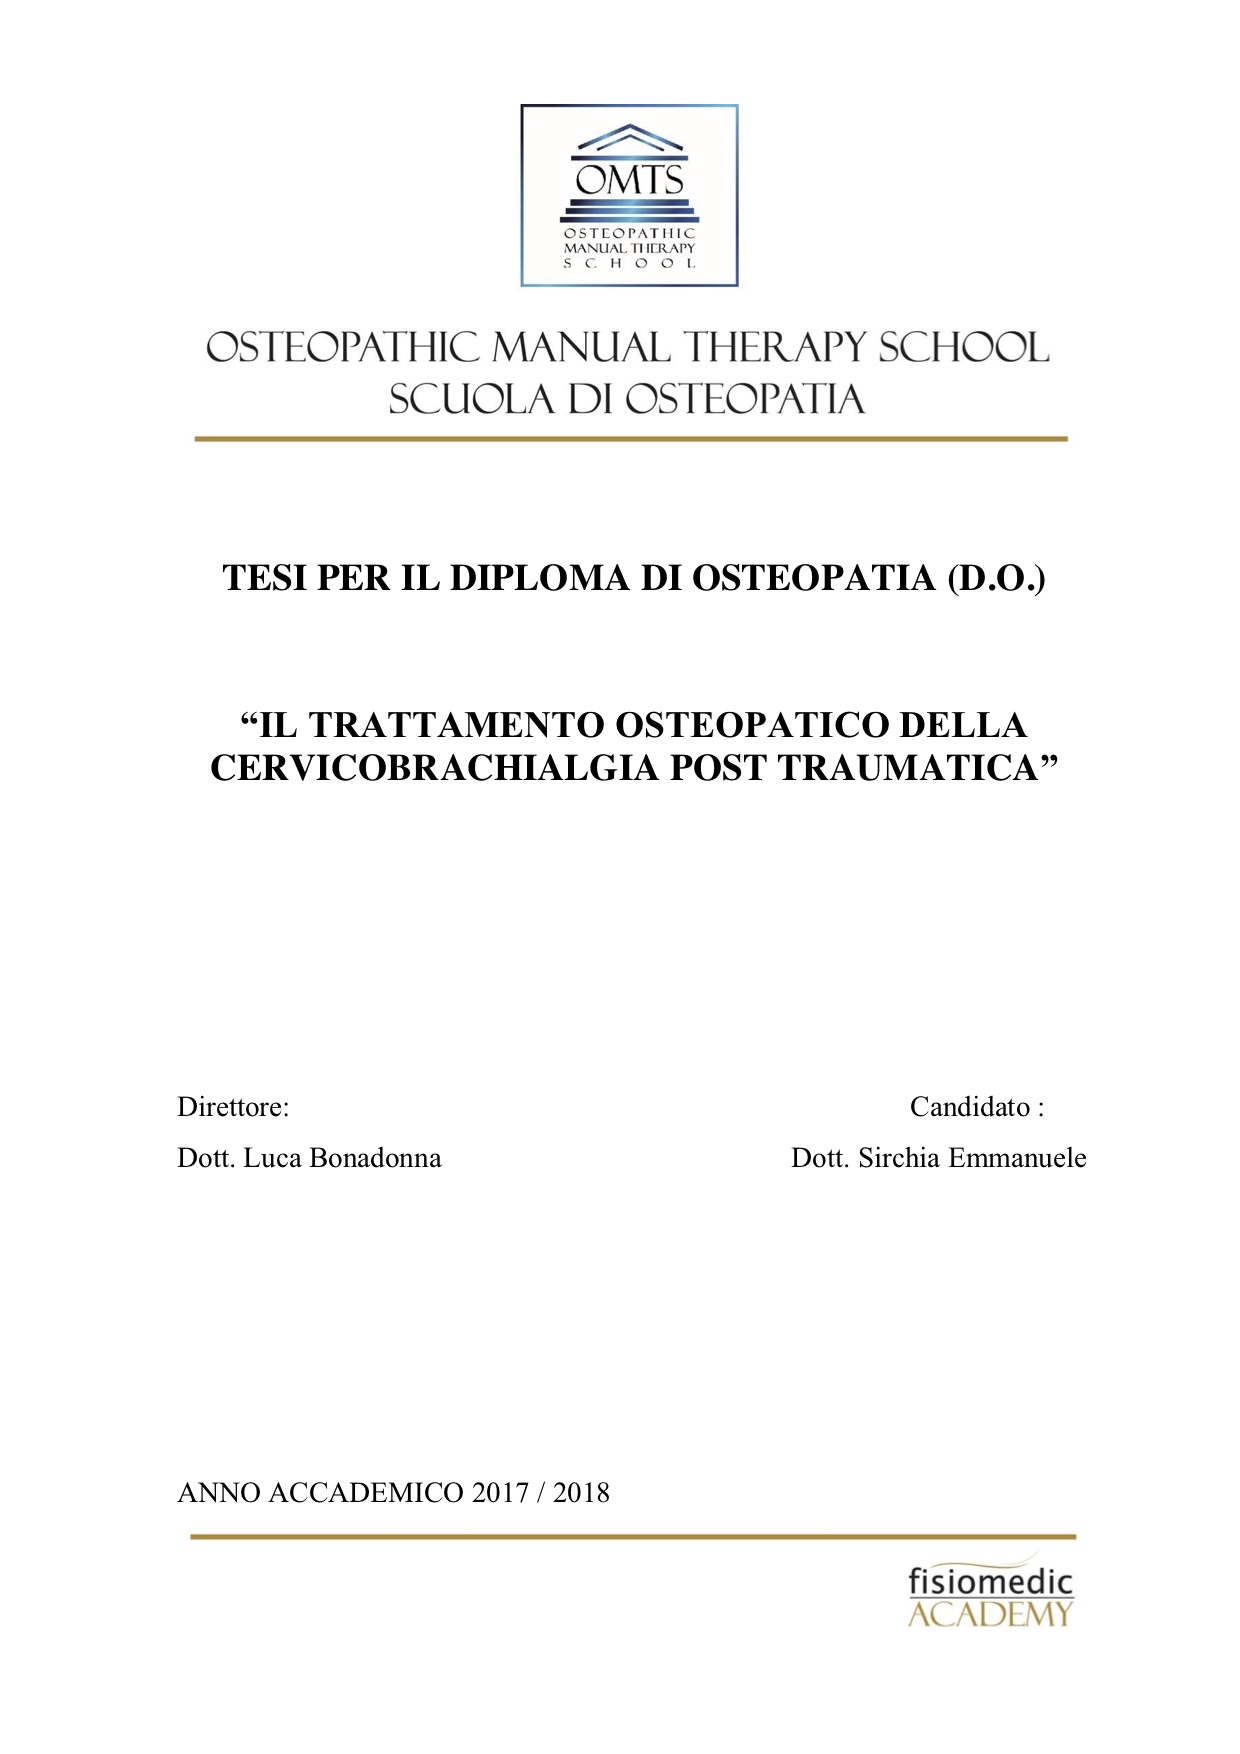 Emmanuele Sirchia Tesi Diploma Osteopatia 2018